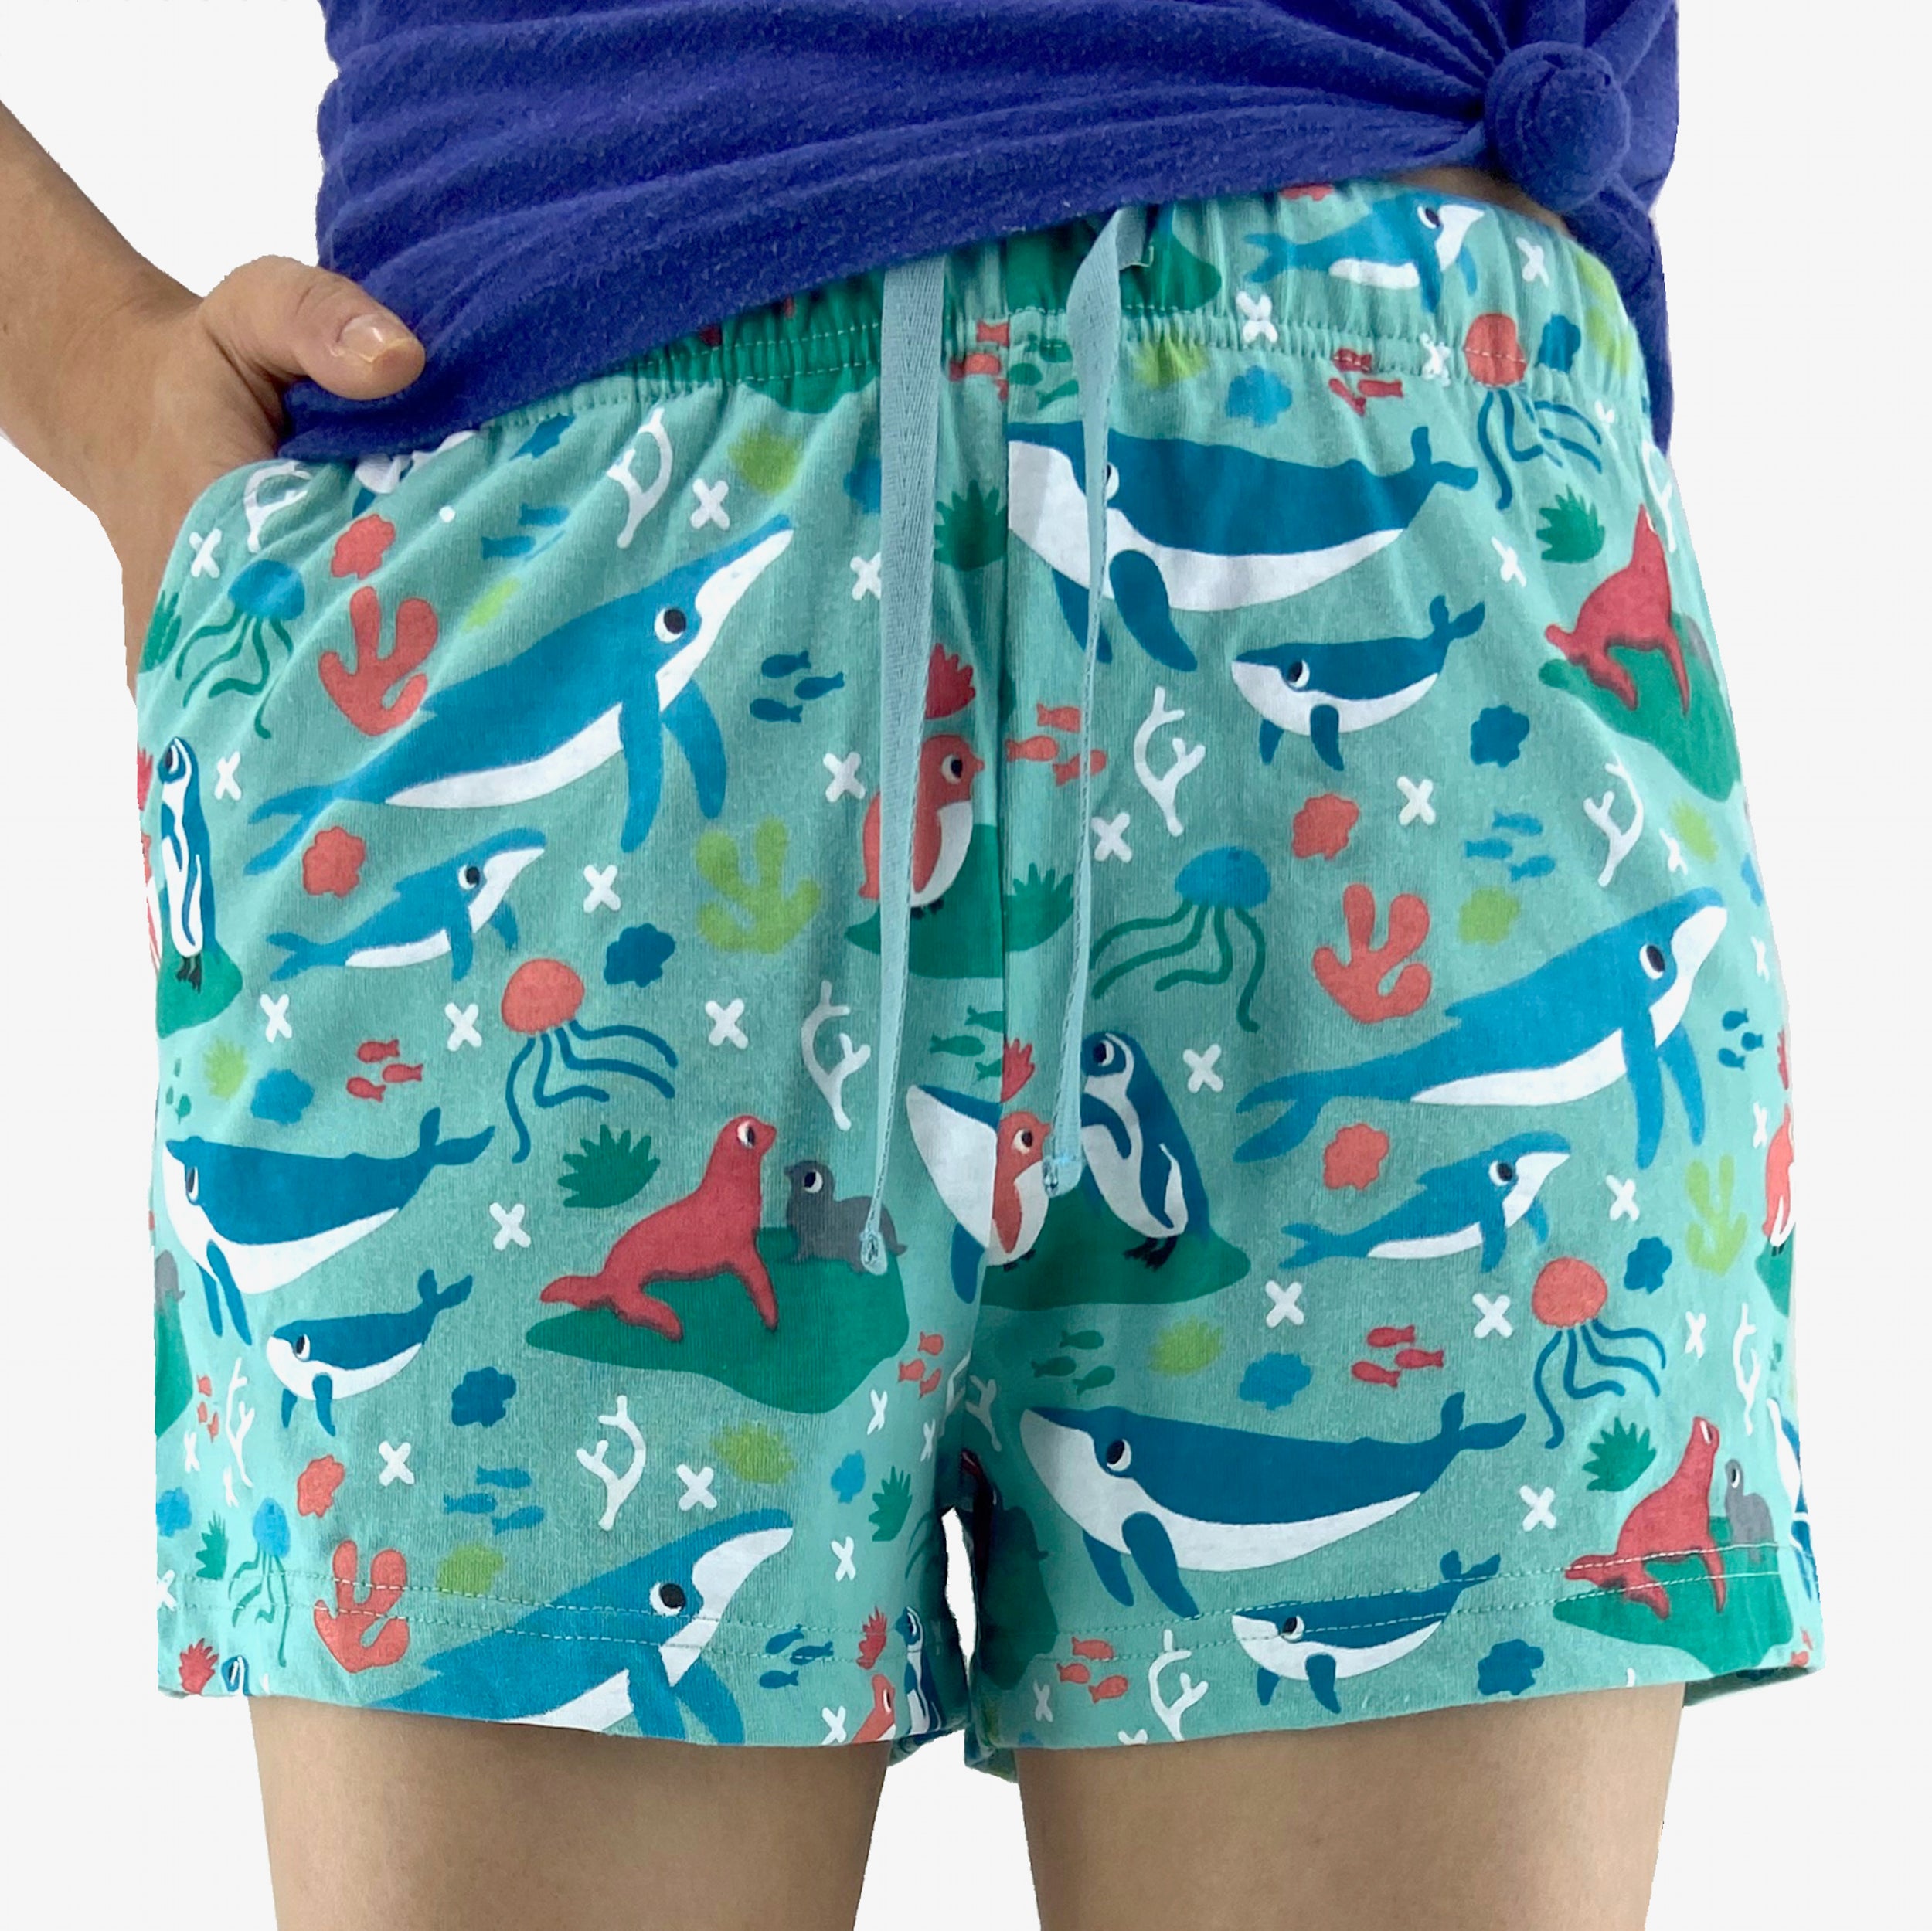 Buy Women's Pajama Shorts Online. Comfy Ladies Sleep Shorts